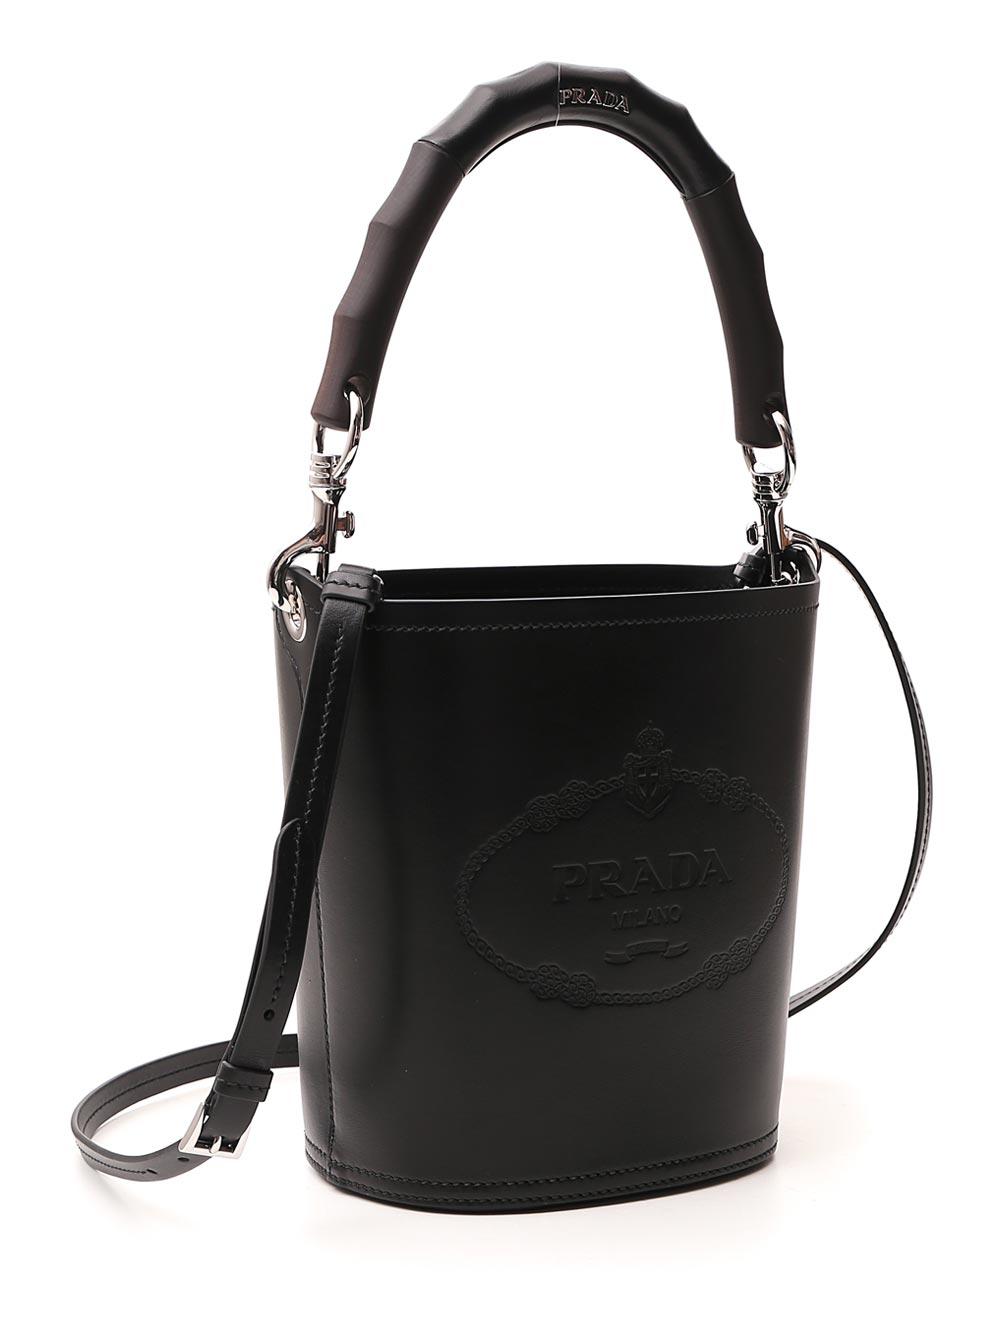 Prada City Heritage Logo Leather Bucket Bag in Black | Lyst